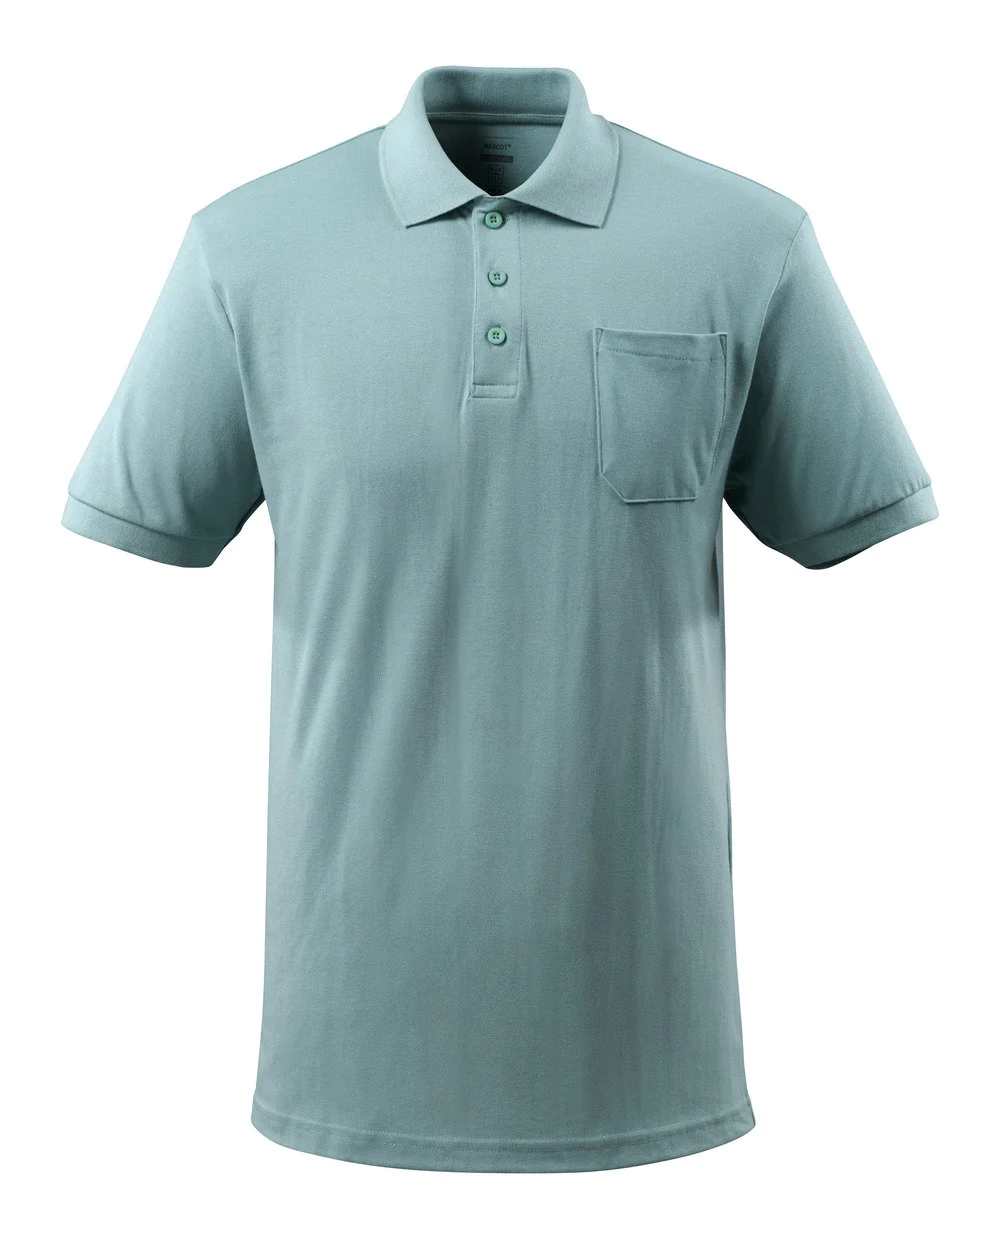 Workwear Polo Shirt Supplier And Wholesaler In Jordan